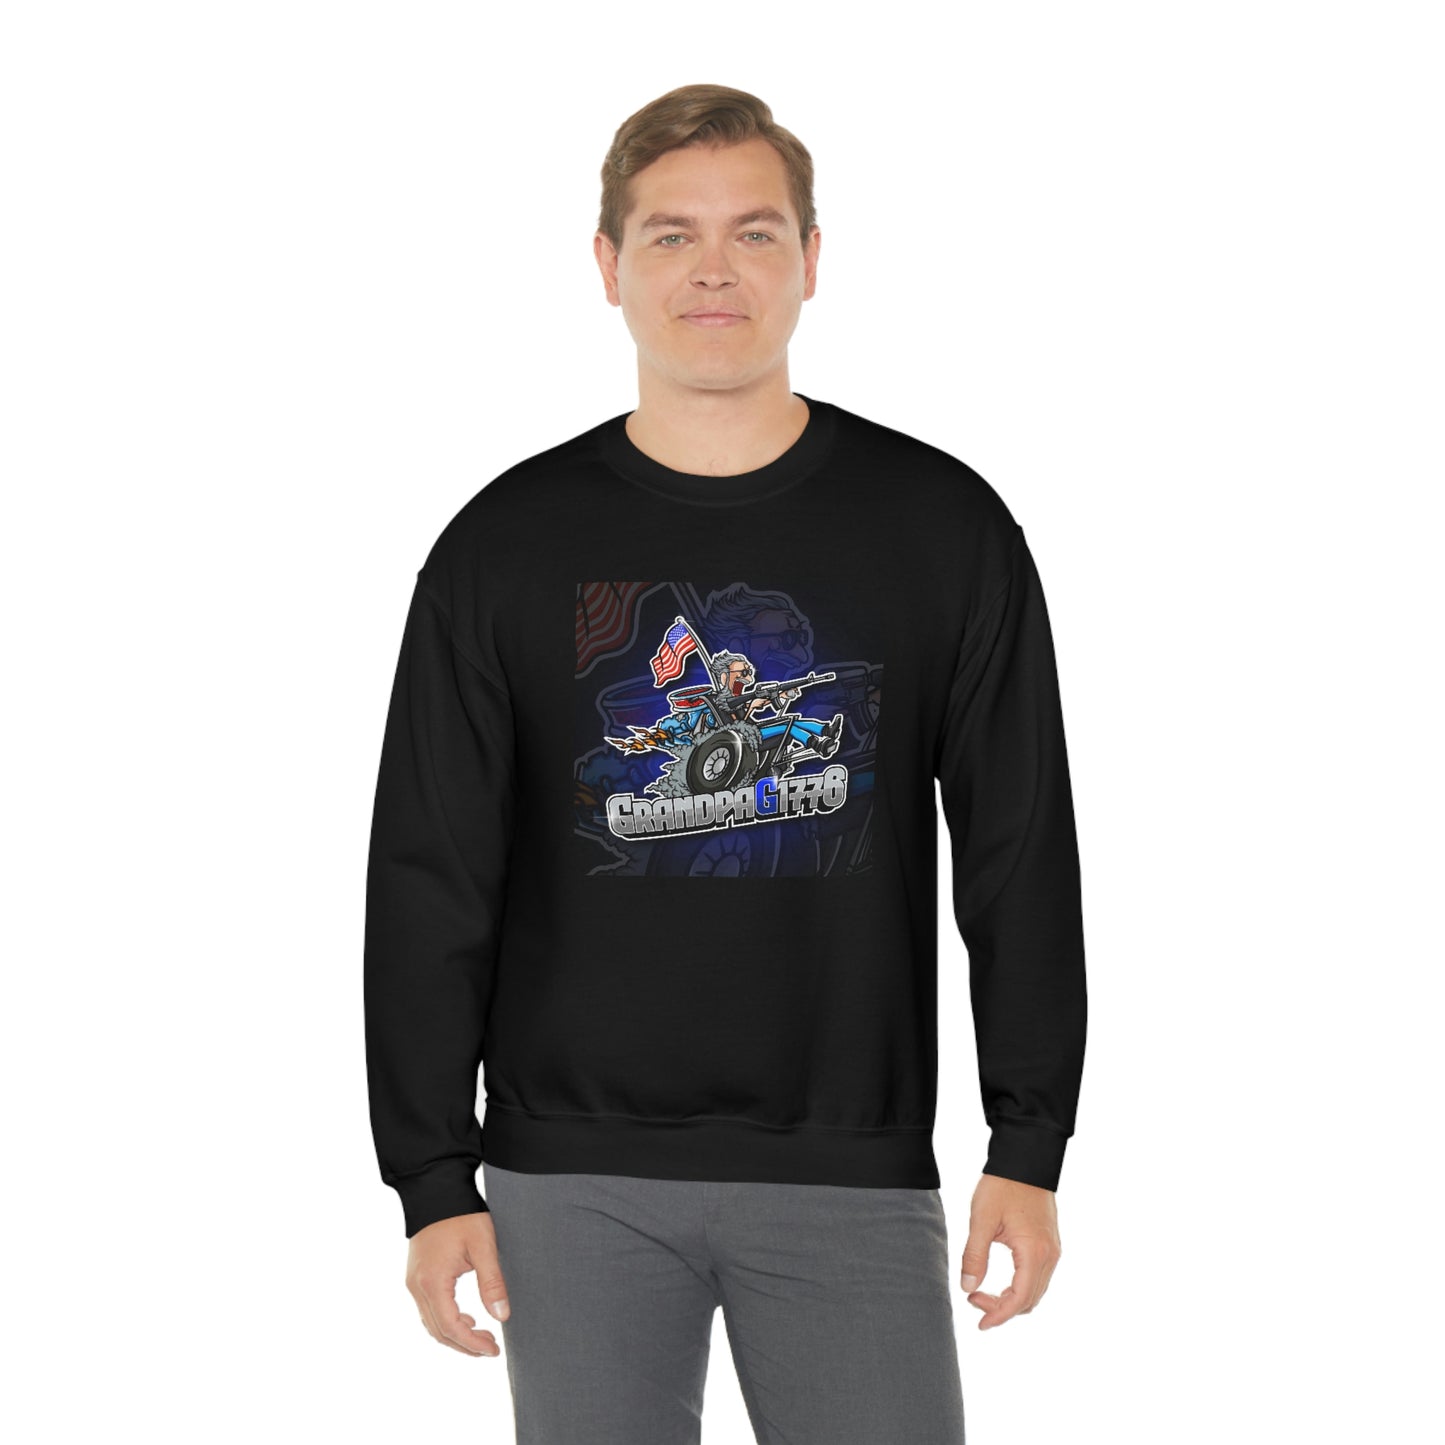 GrandpaG Silhouette Unisex Sweatshirt